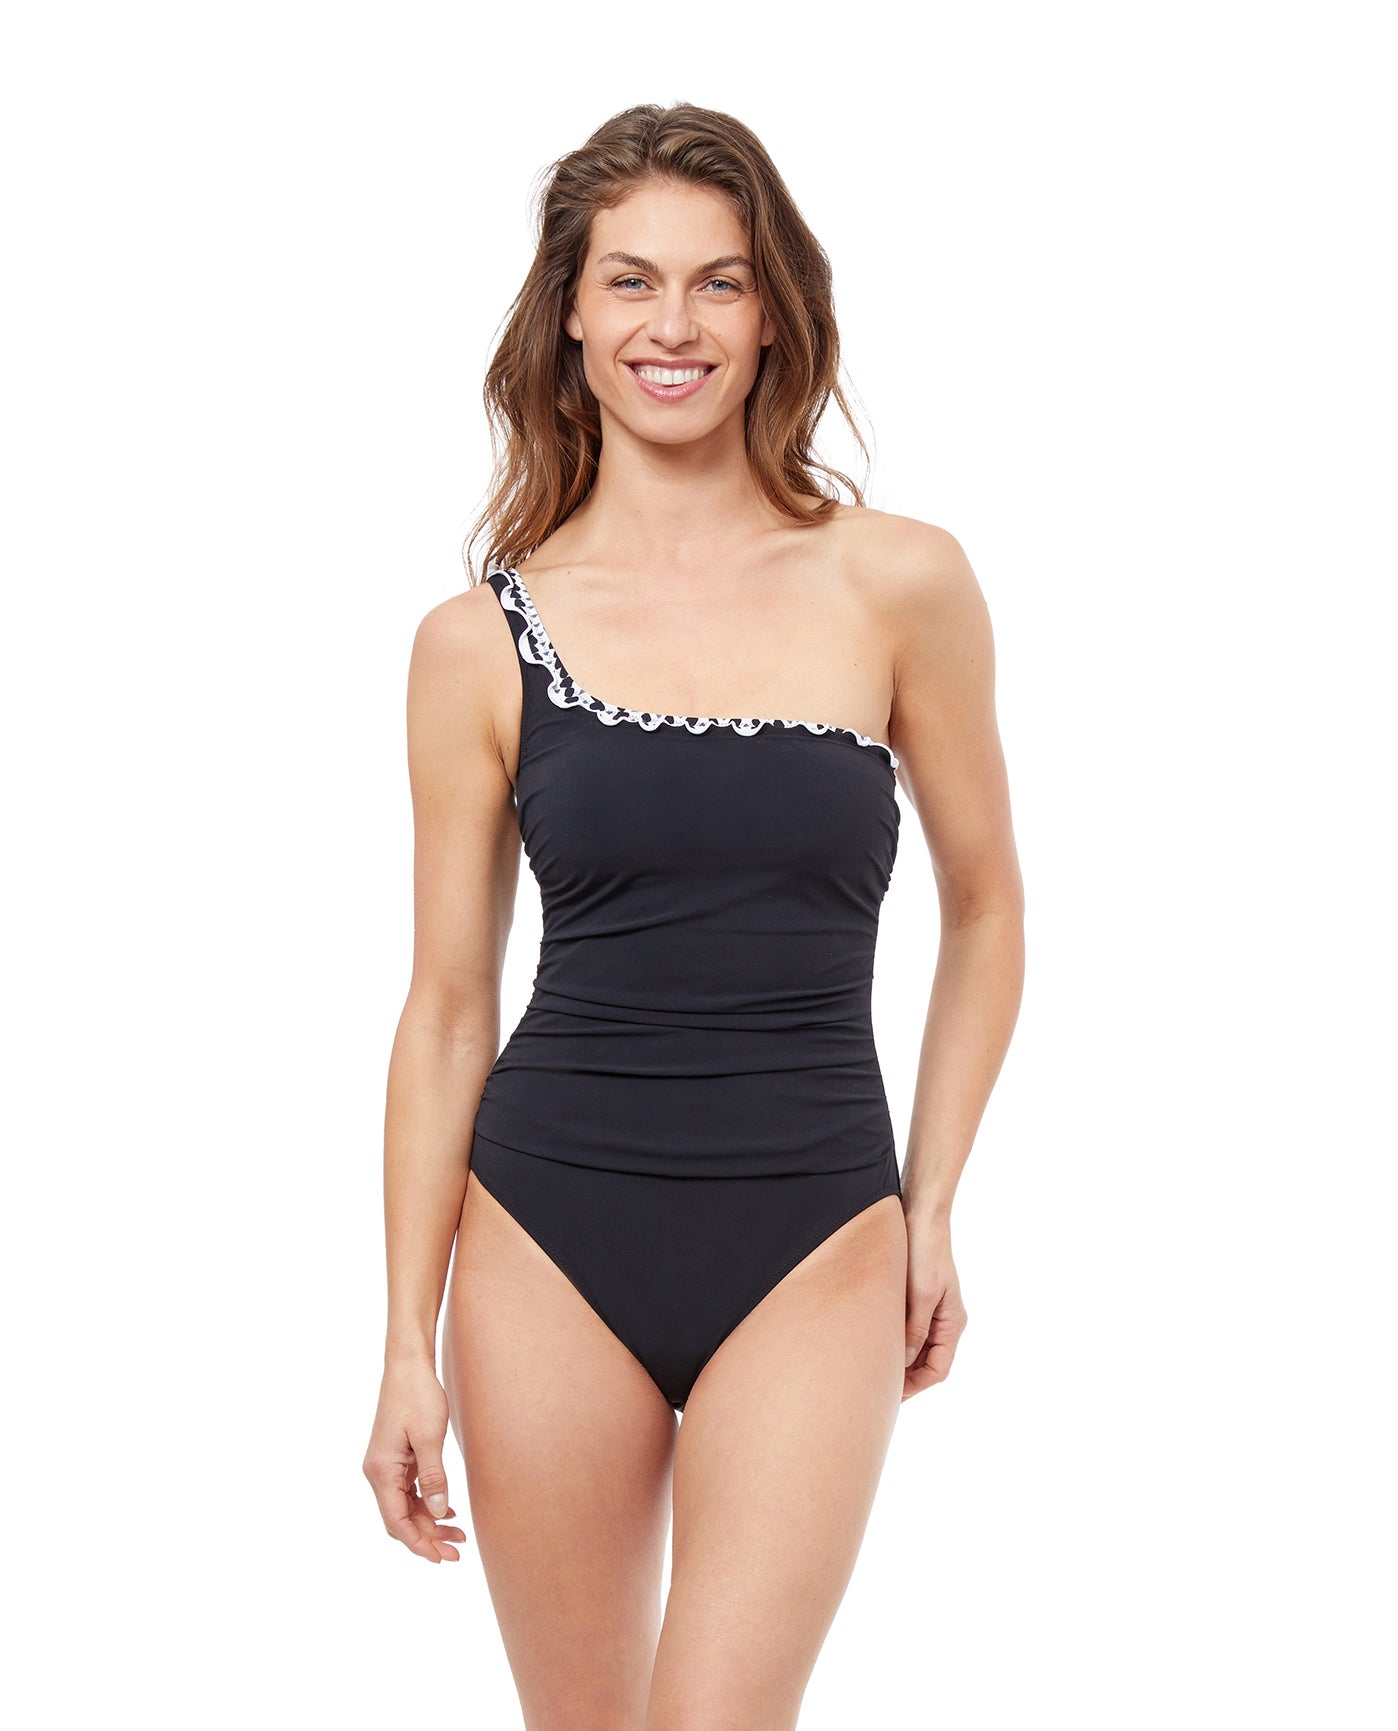 Gottex Women's US 8 Shirred One Piece Swimsuit Black/White